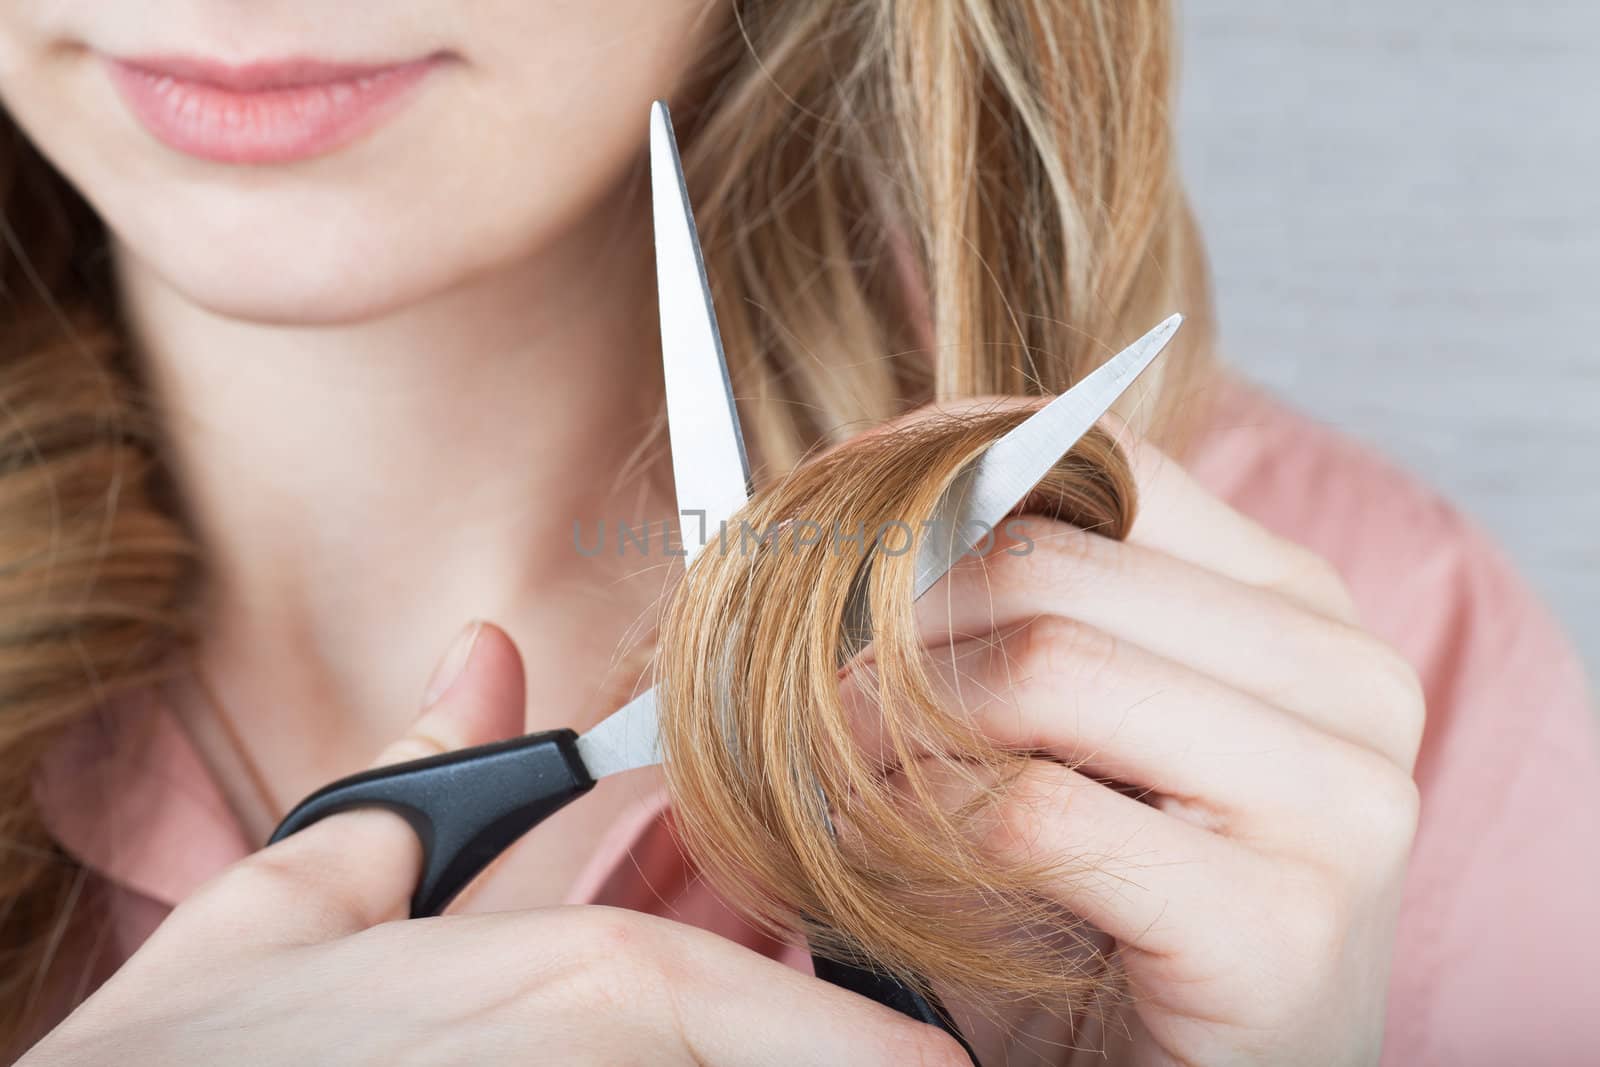 Closeup view of woman cutting her hair